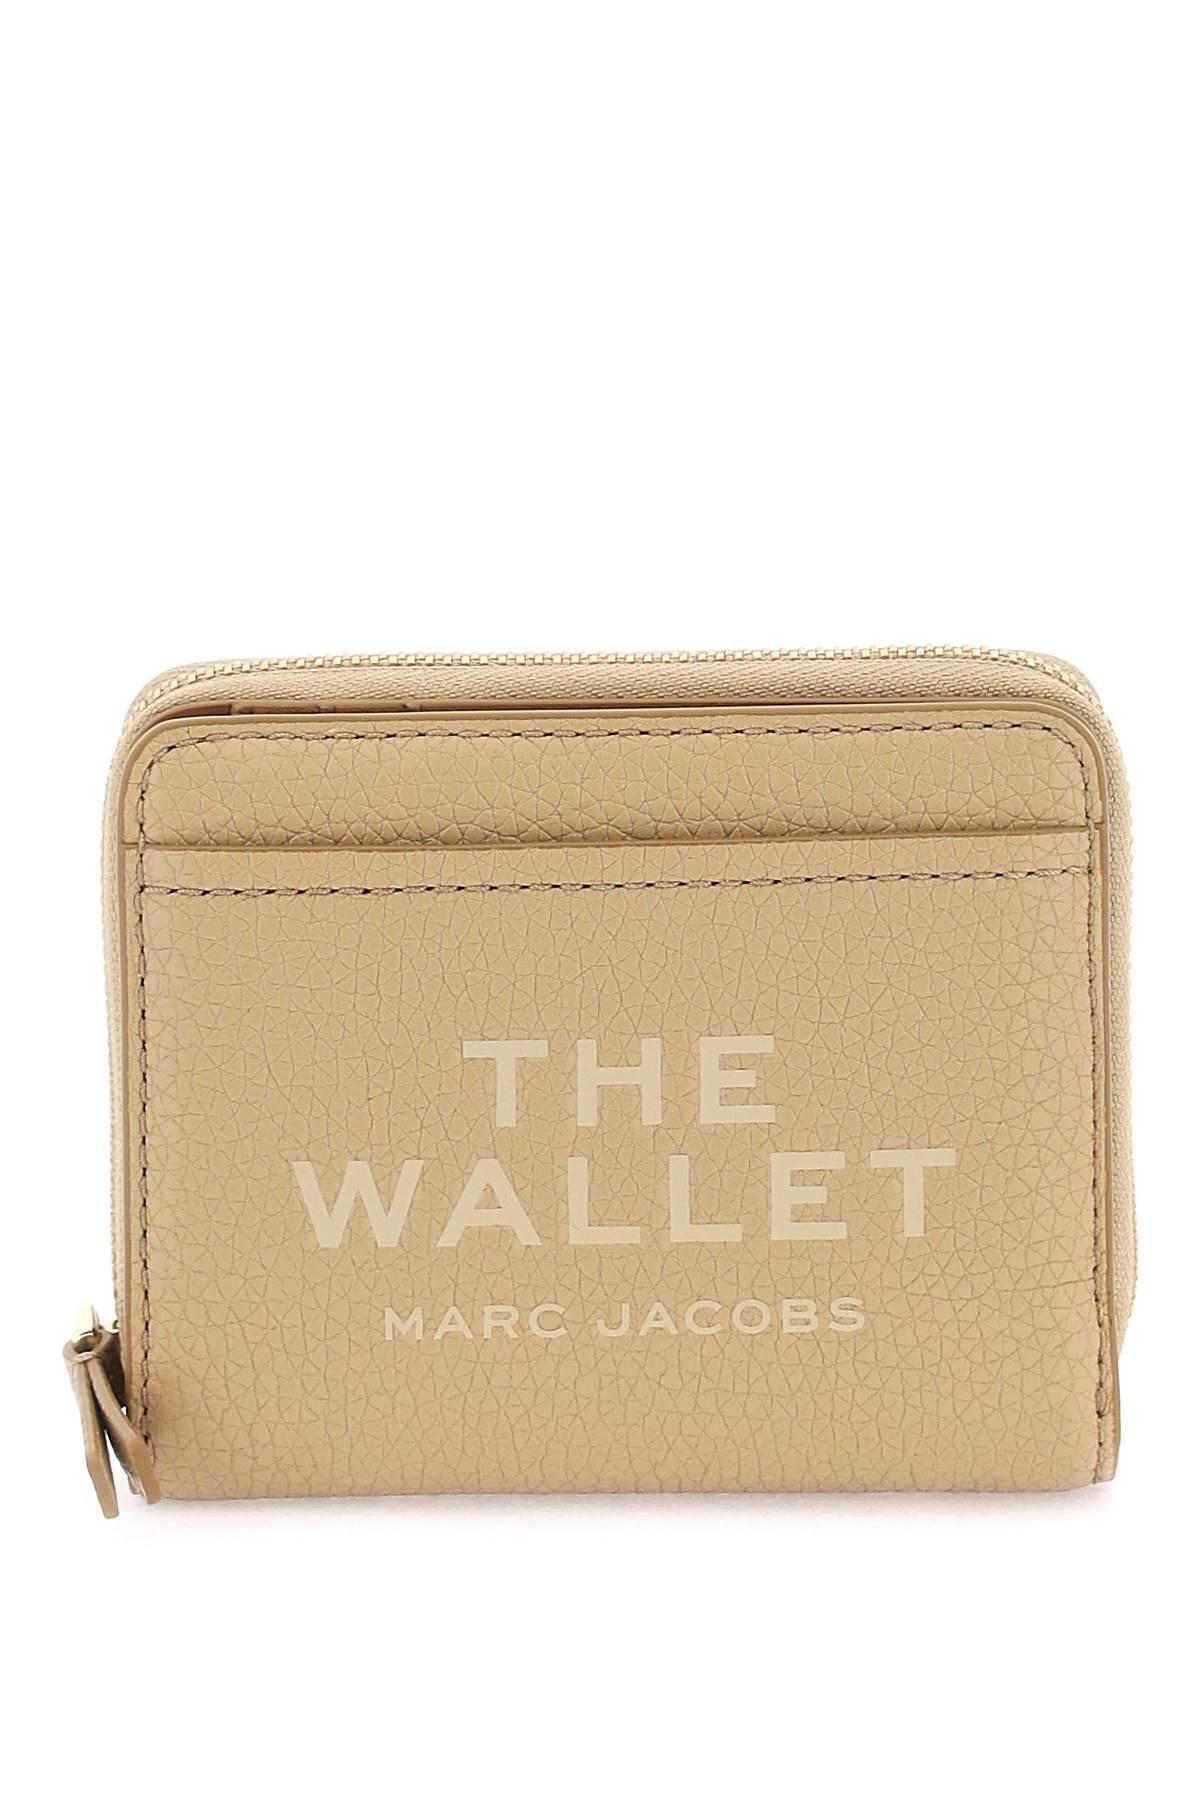 Marc Jacobs The Leather Mini Compact Wallet - JOHN JULIA